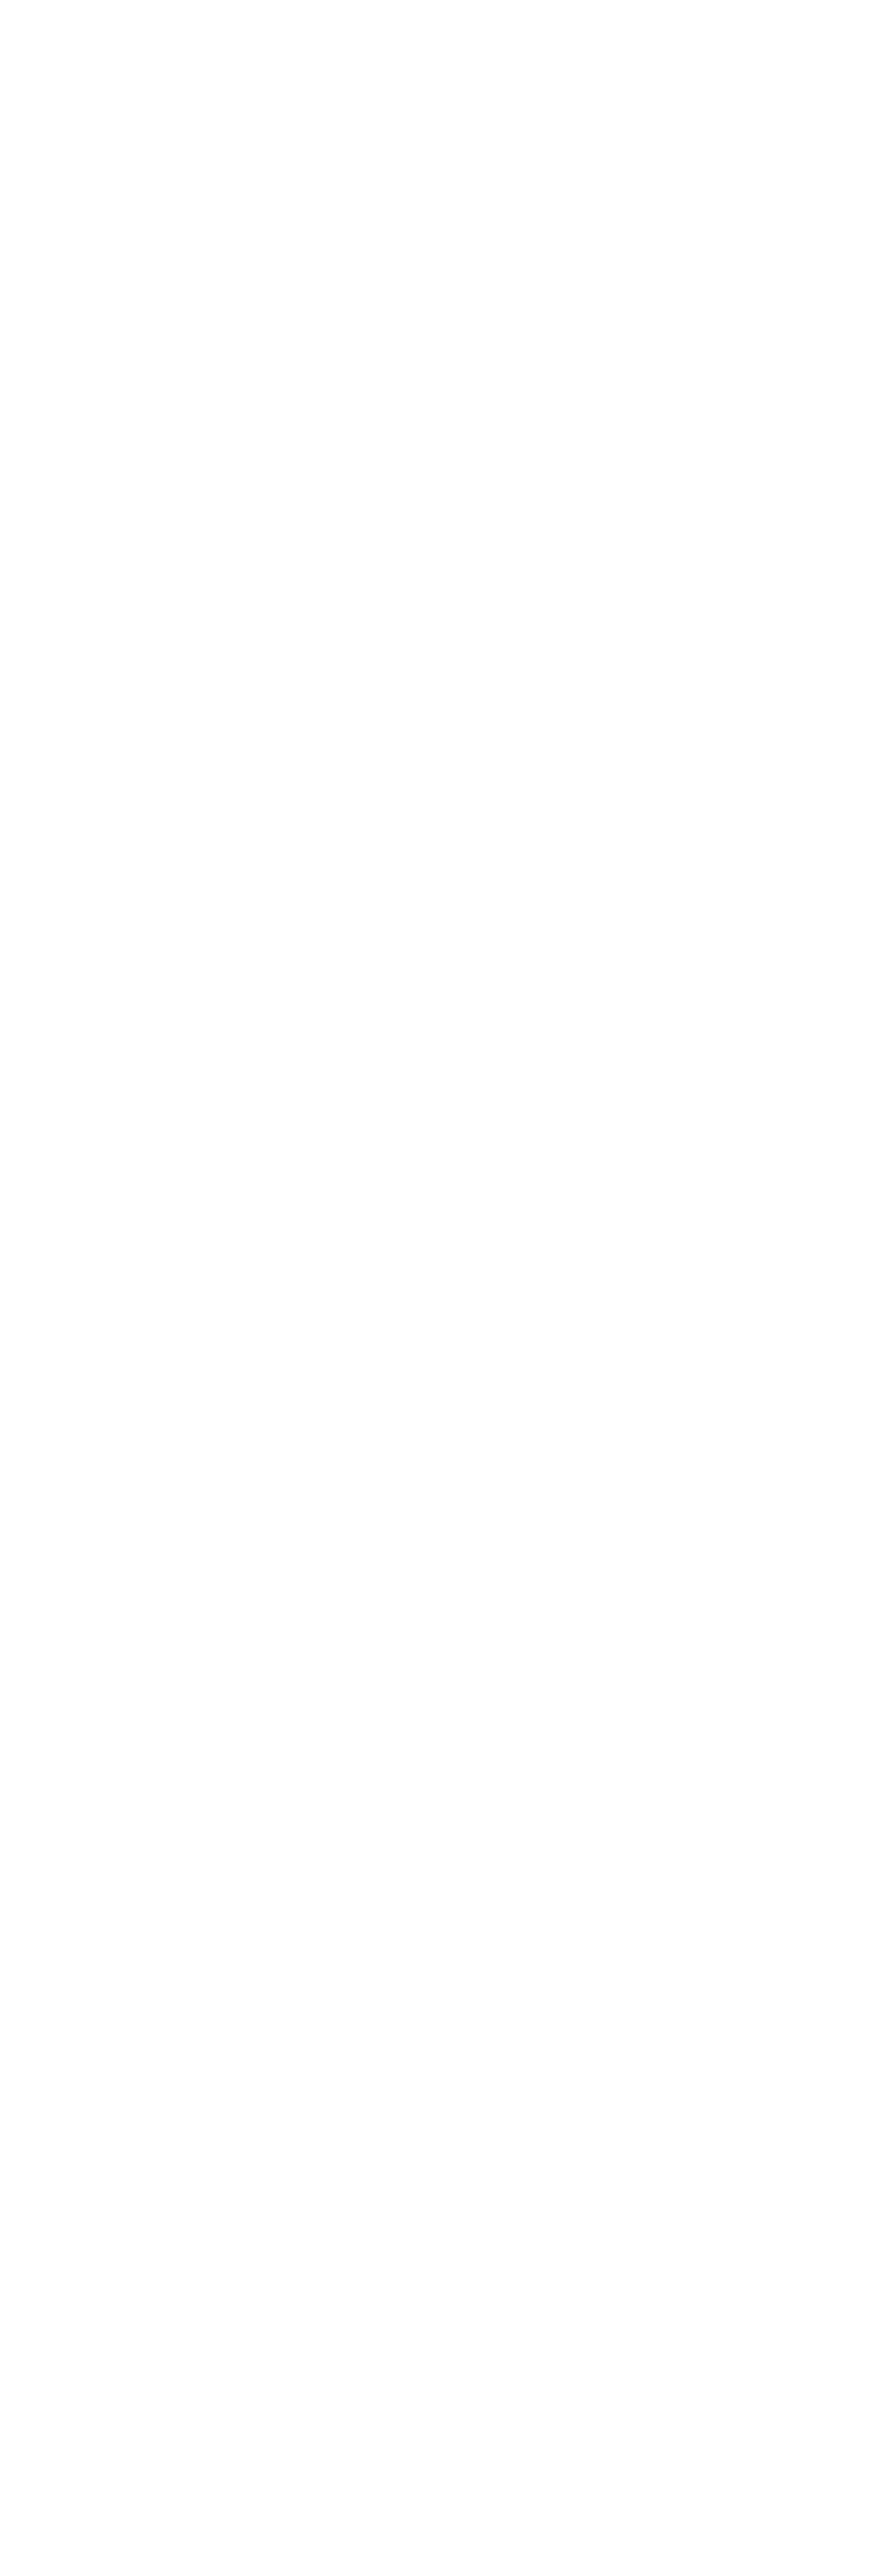 дизайн логотипа Альфаресурс